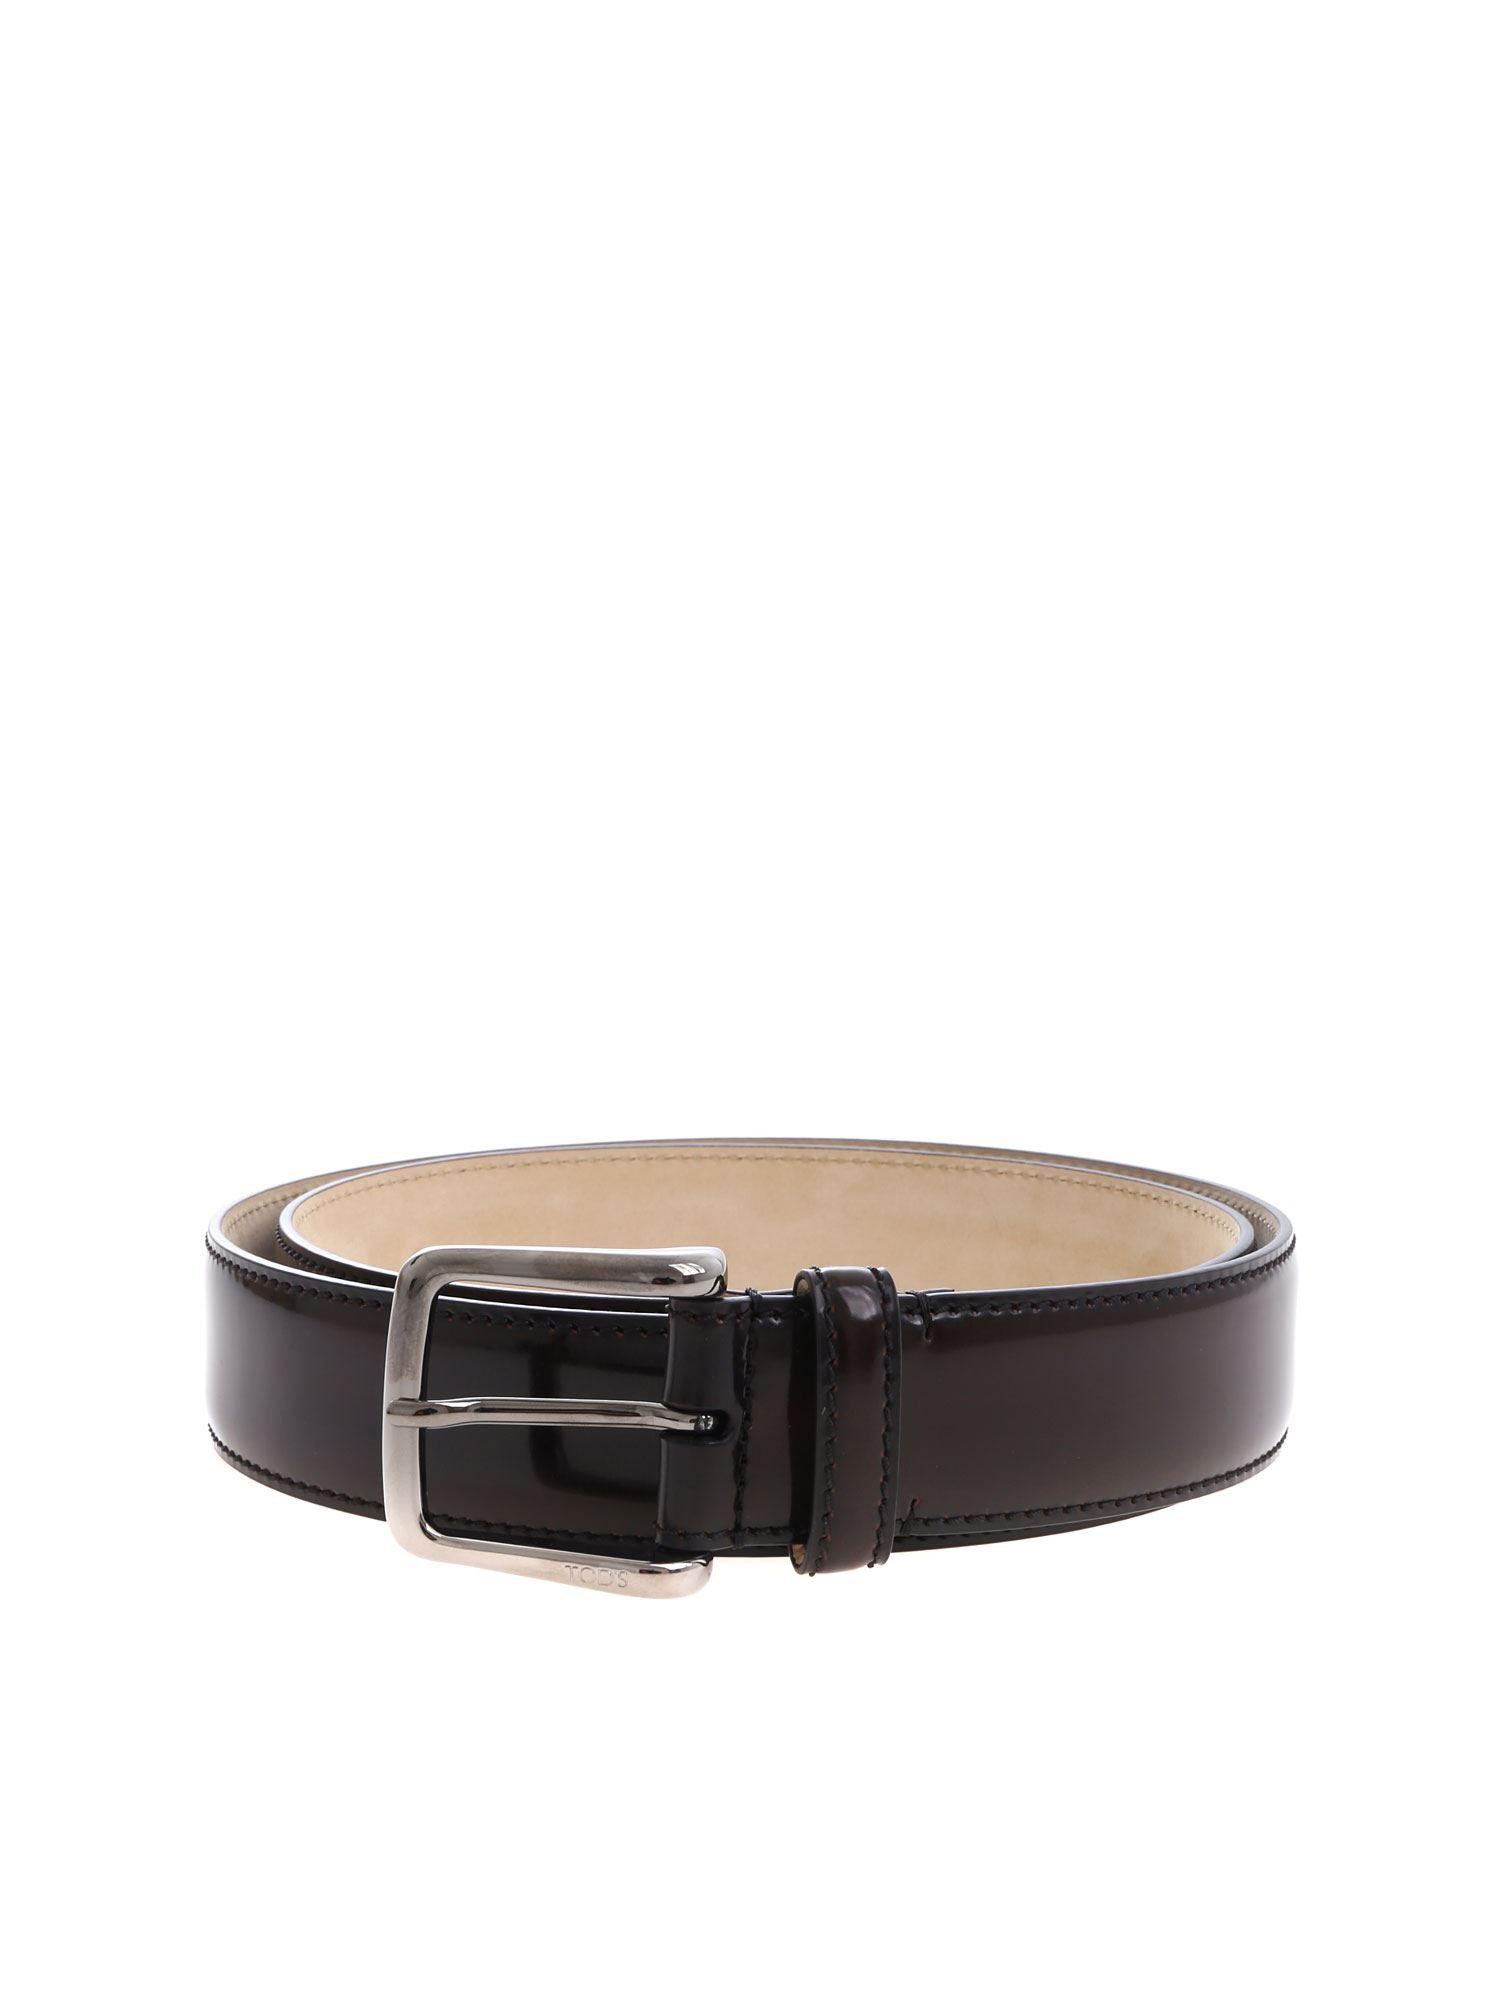 Tod's Men's Belt In Brown Leather for Men - Lyst